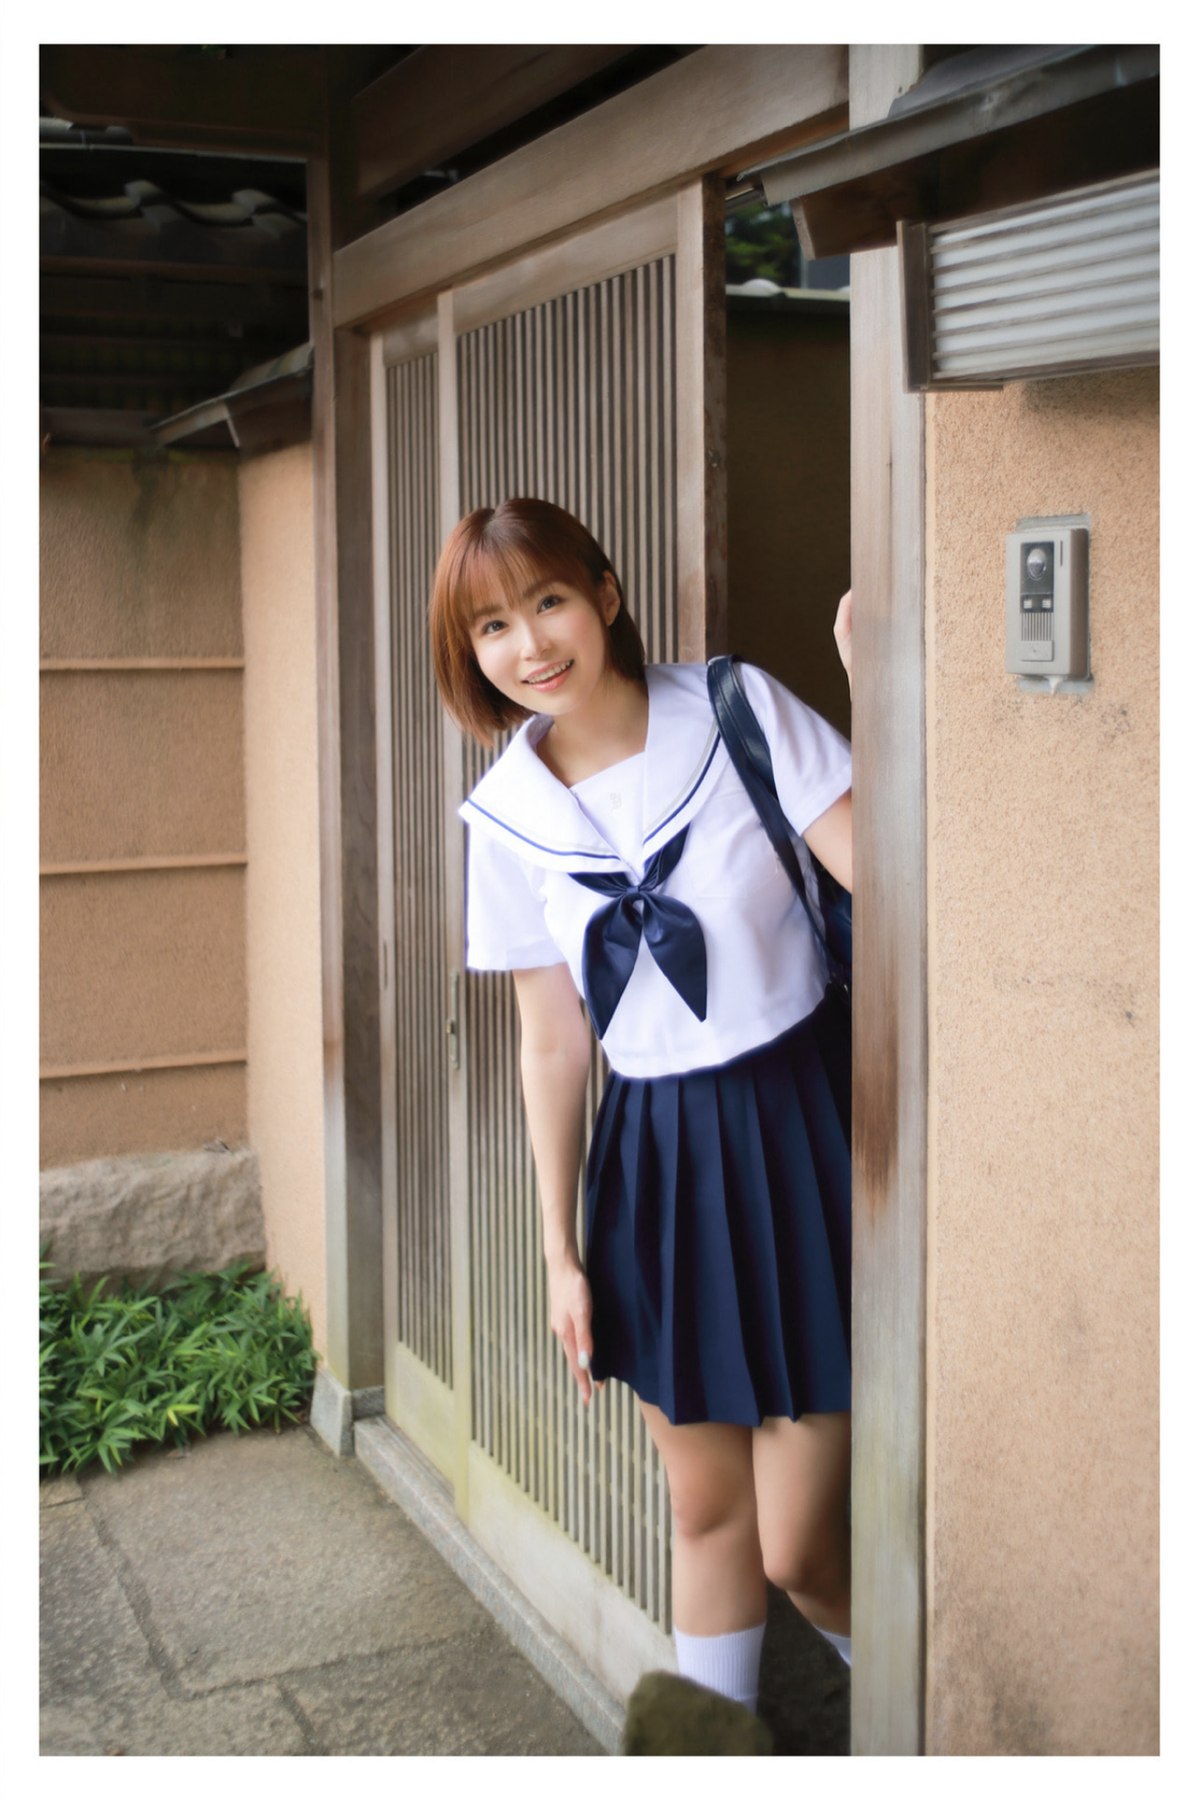 Photobook Kawai Asuna 河合あすな Official Gravure Photo Book The Beginning Season 0023 5422337177.jpg